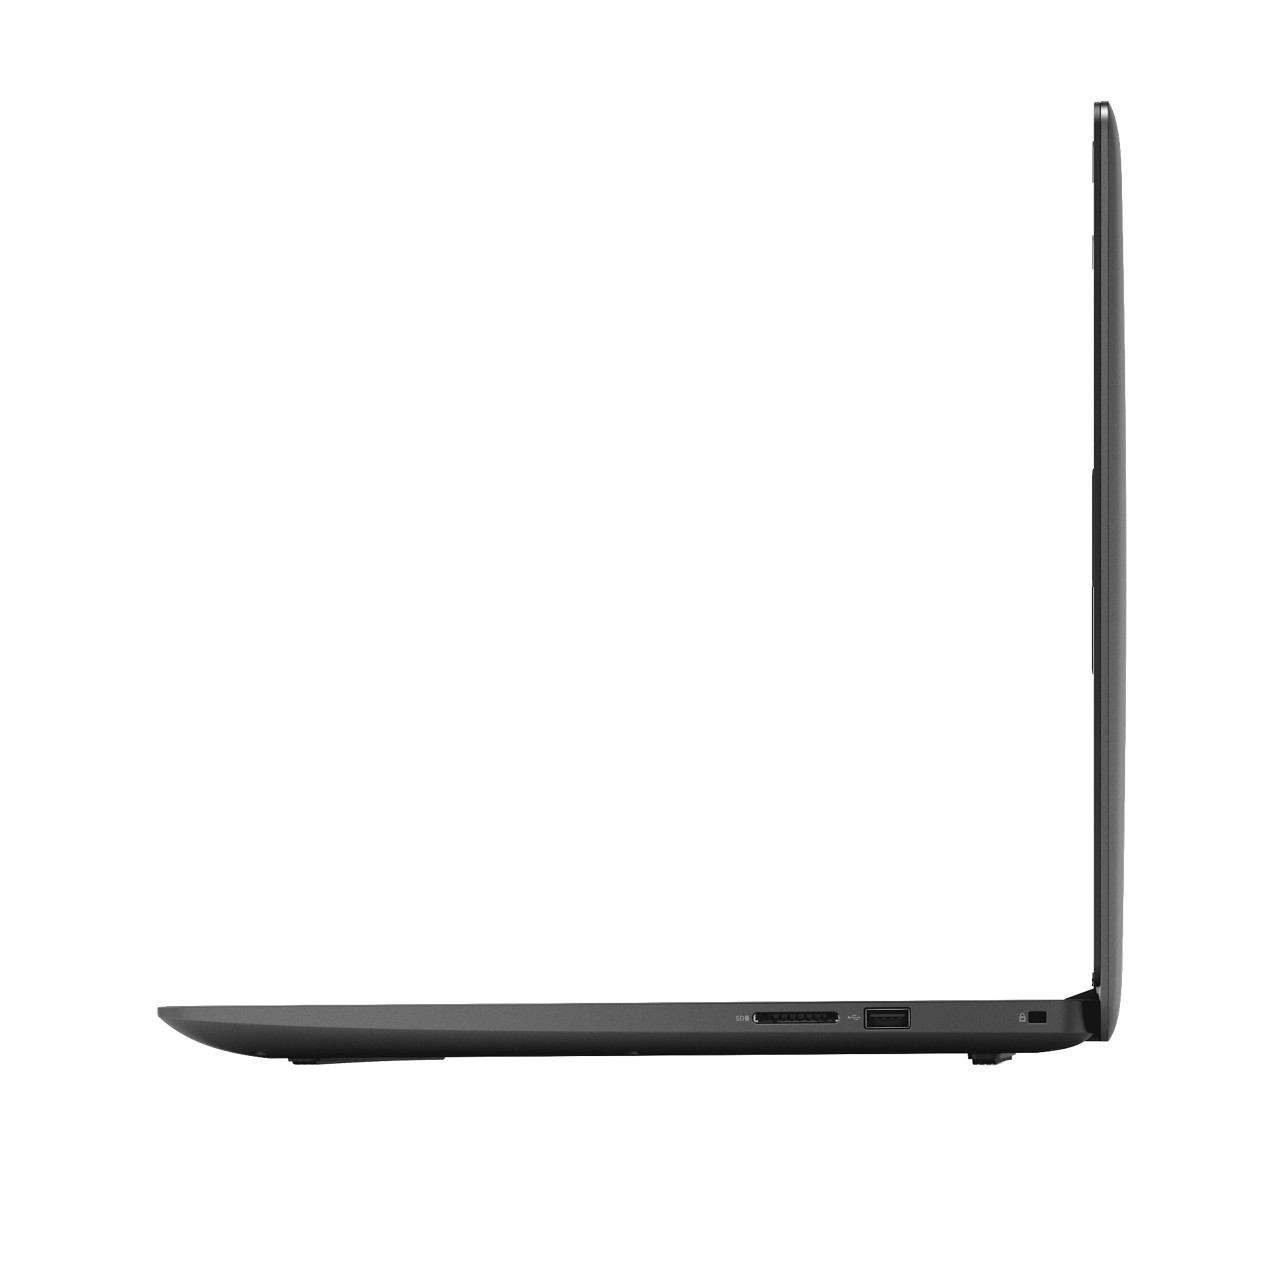 Dell G3 Gaming Laptop 17.3" Intel Core i7-8750H, NVIDIA GeForce GTX 1050Ti, 16GB RAM, 128GB SSD + 1TB HDD WIN 10, G3779-7927BLK-PUS - image 3 of 8